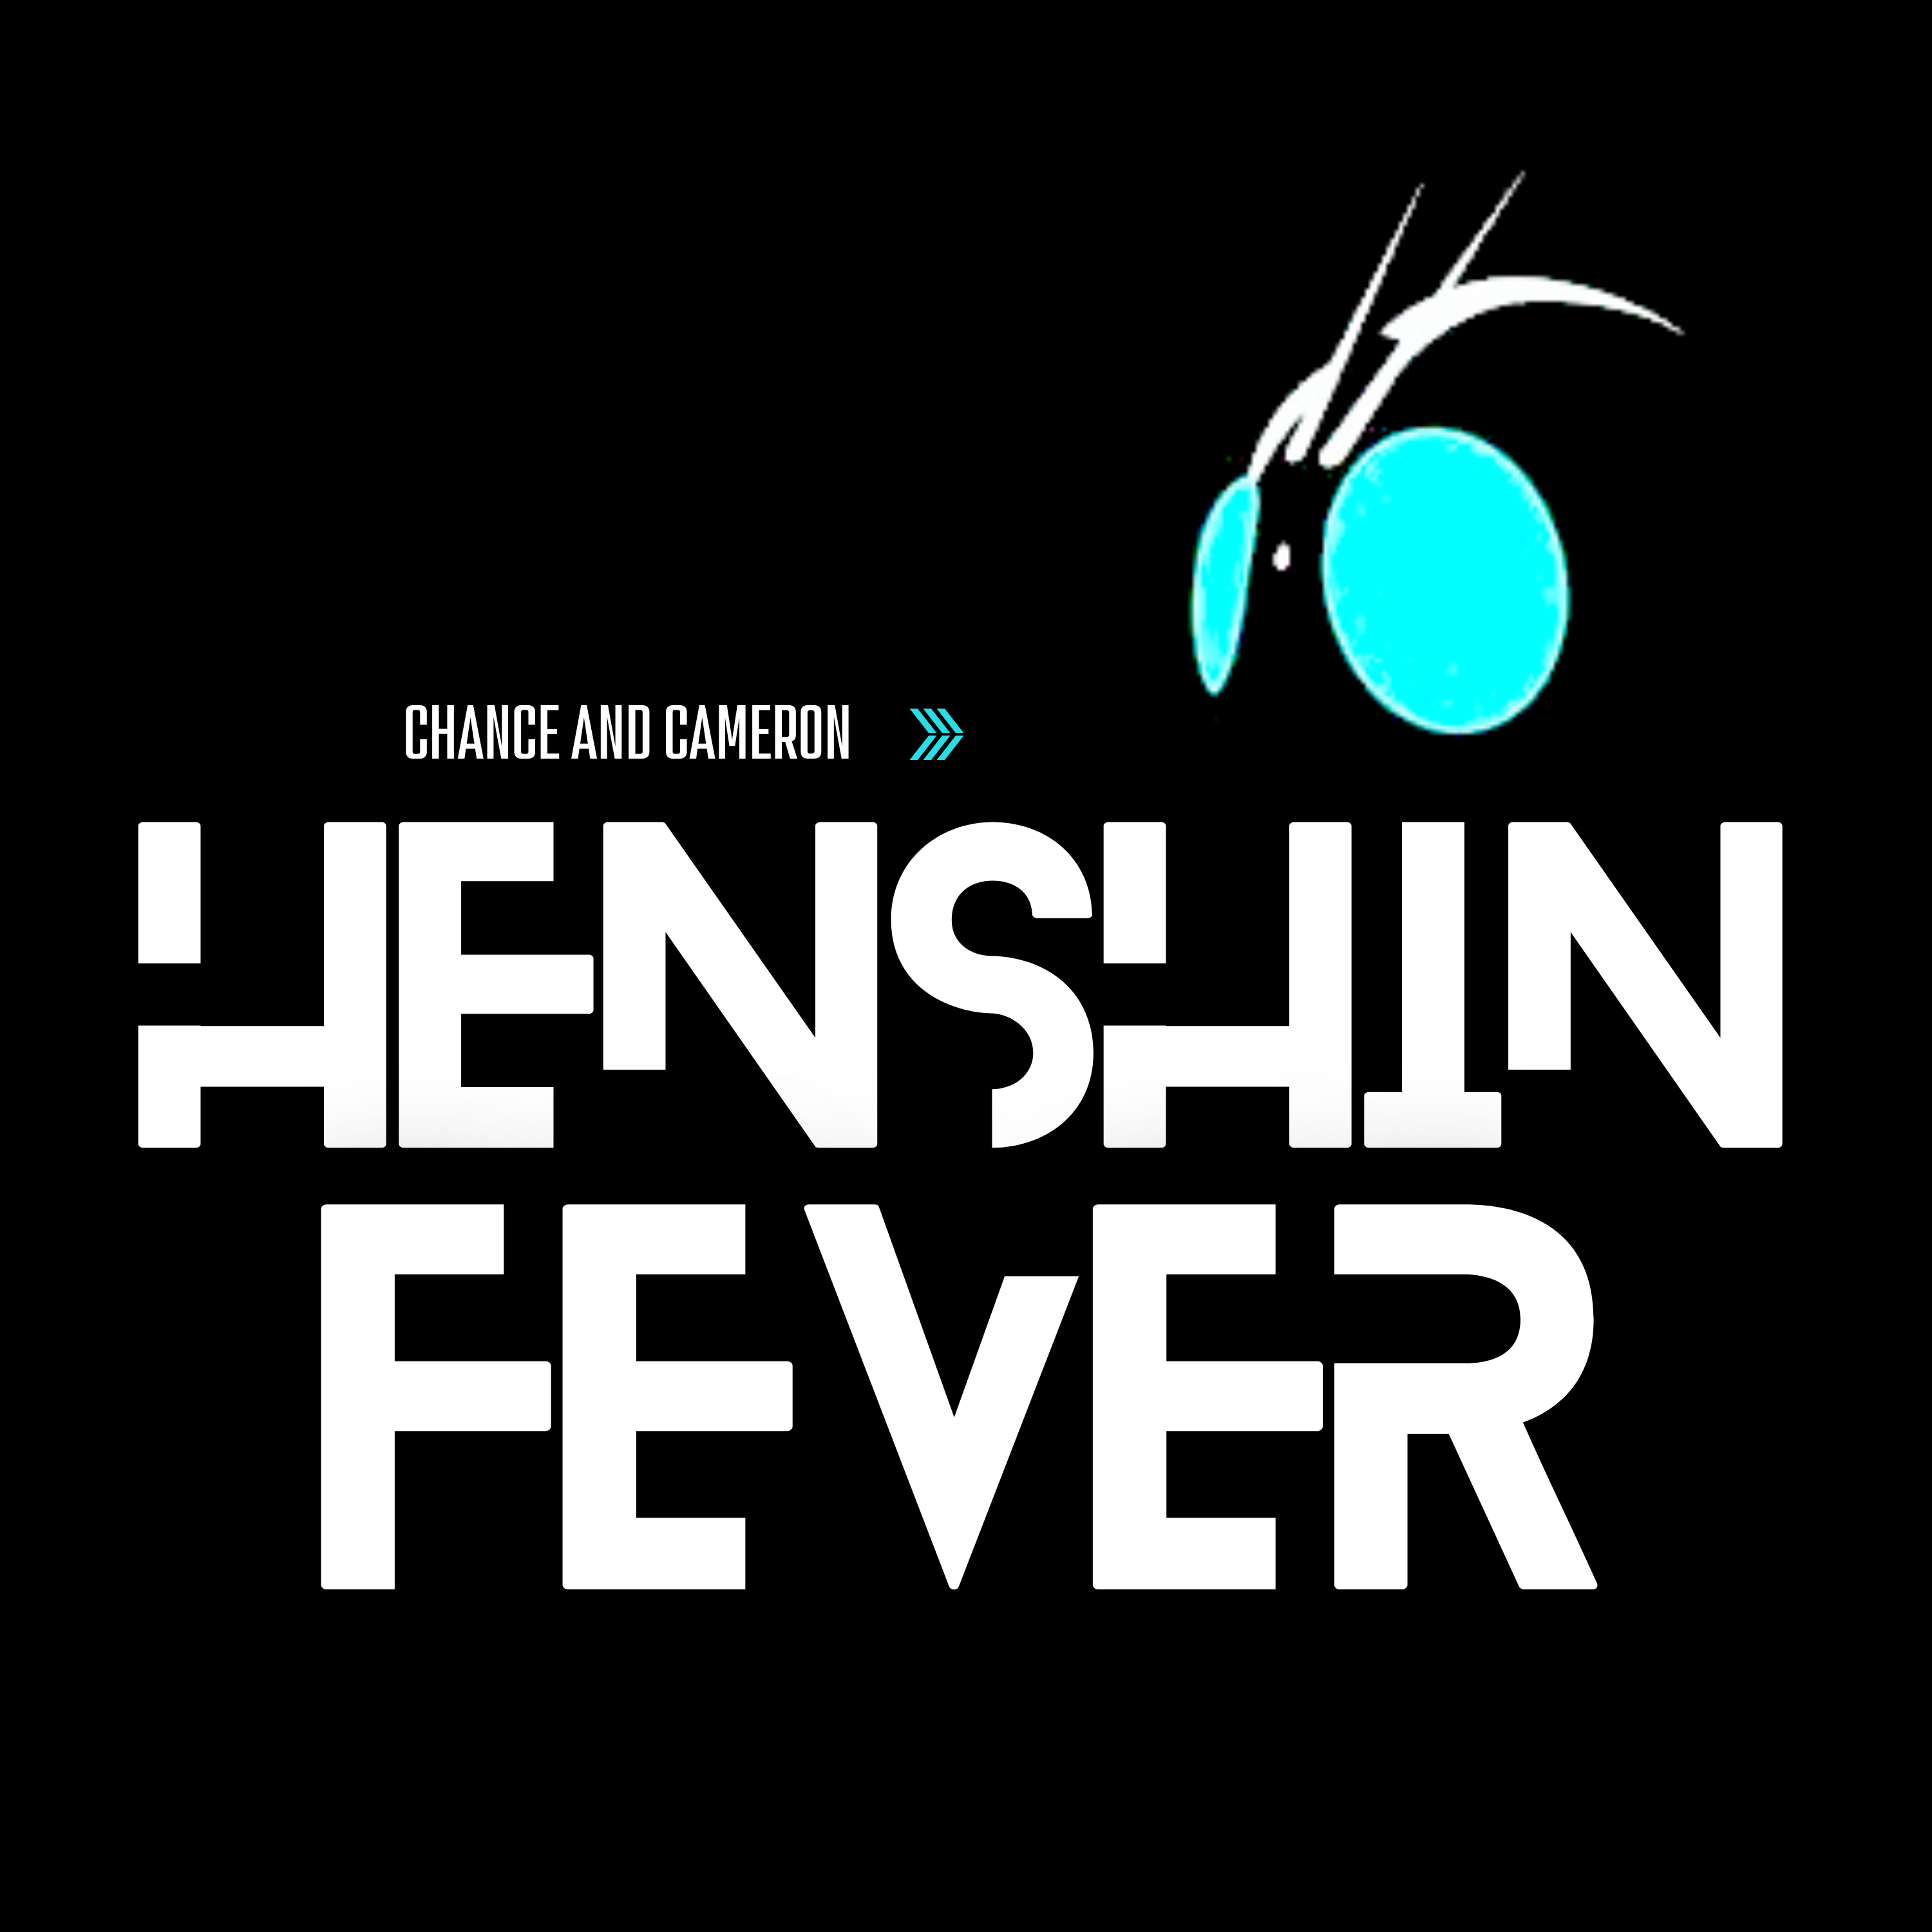 Gotchard Episode 8 - Henshin Fever